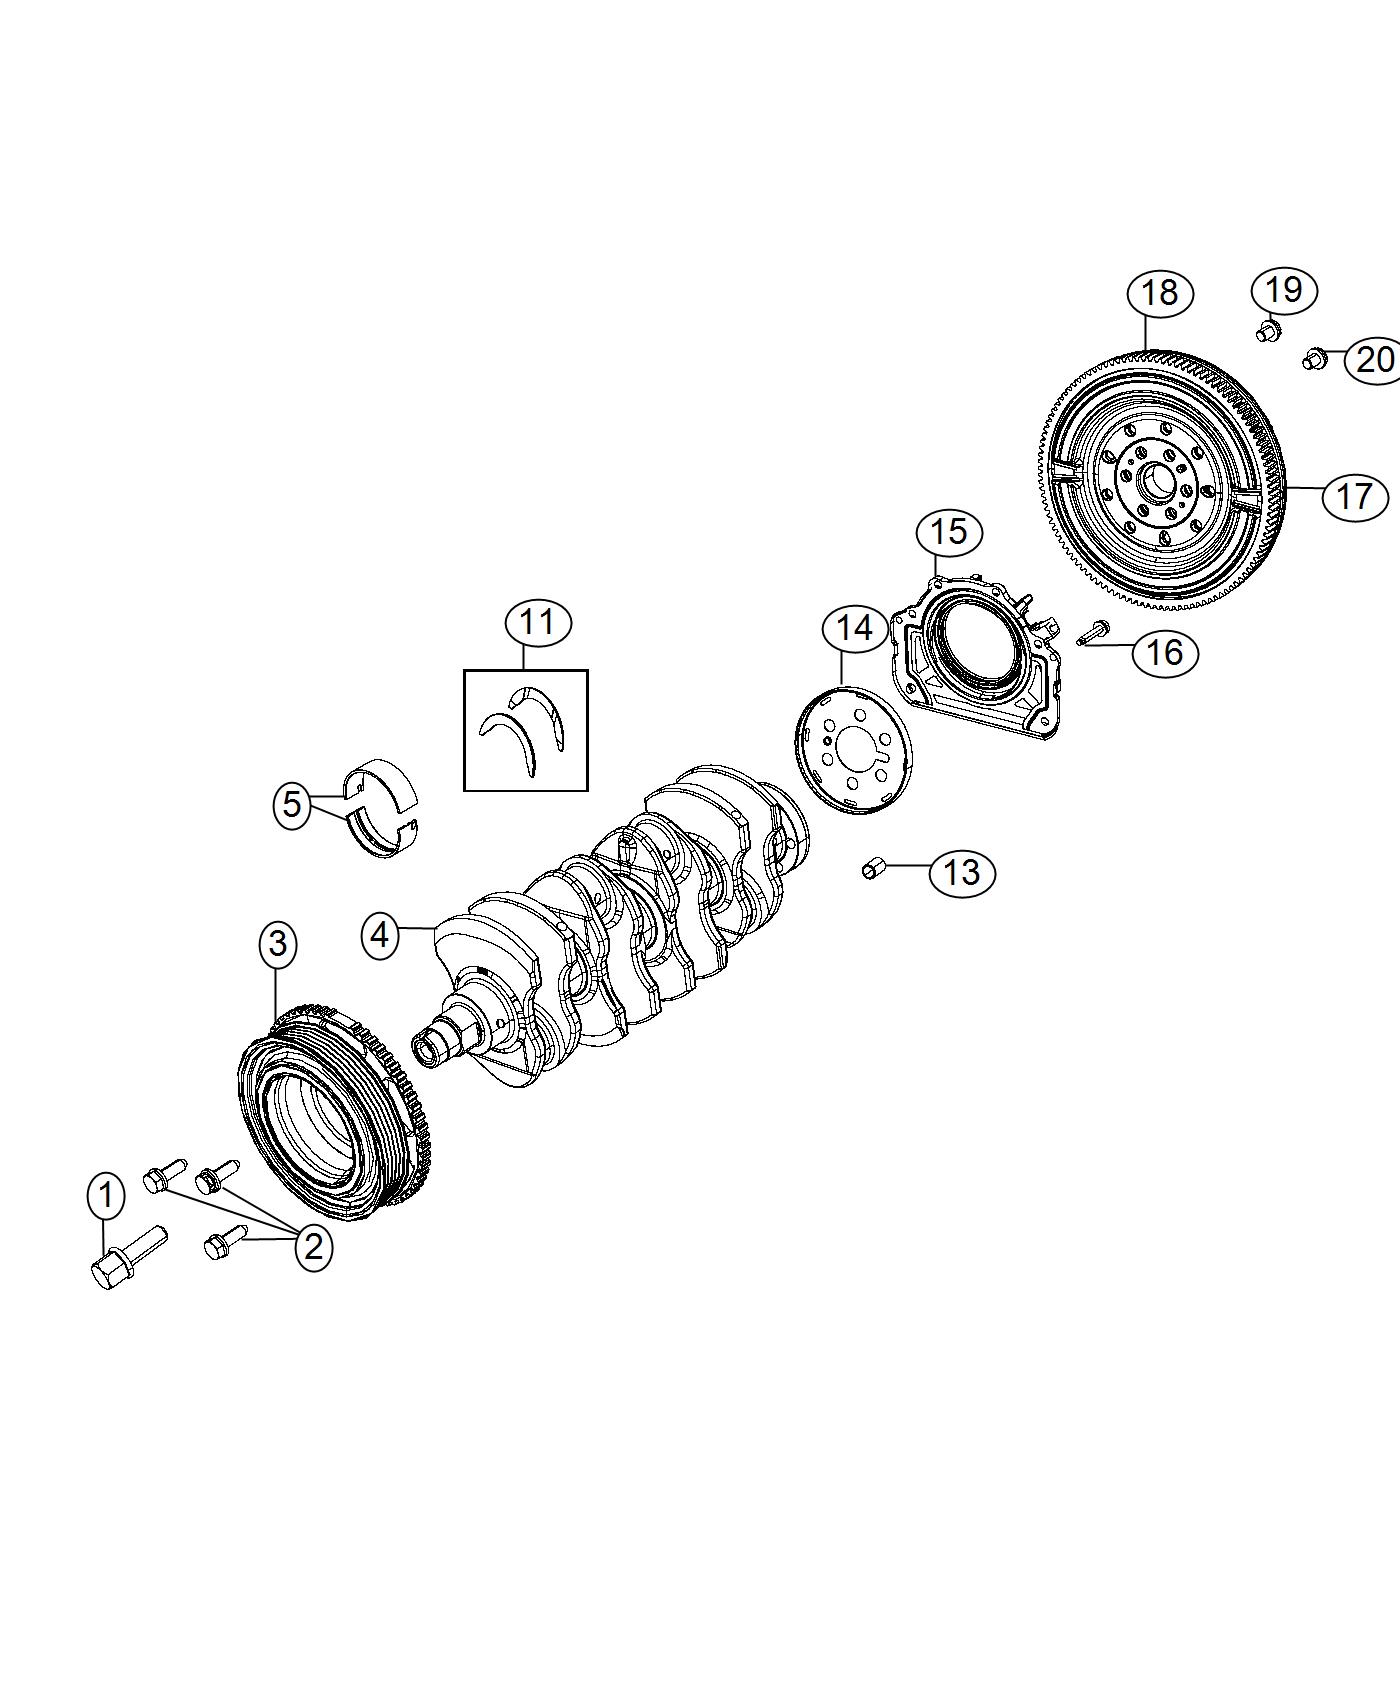 Crankshaft, Crankshaft Bearings, Damper And Flywheel 1.4L Turbocharged. Diagram